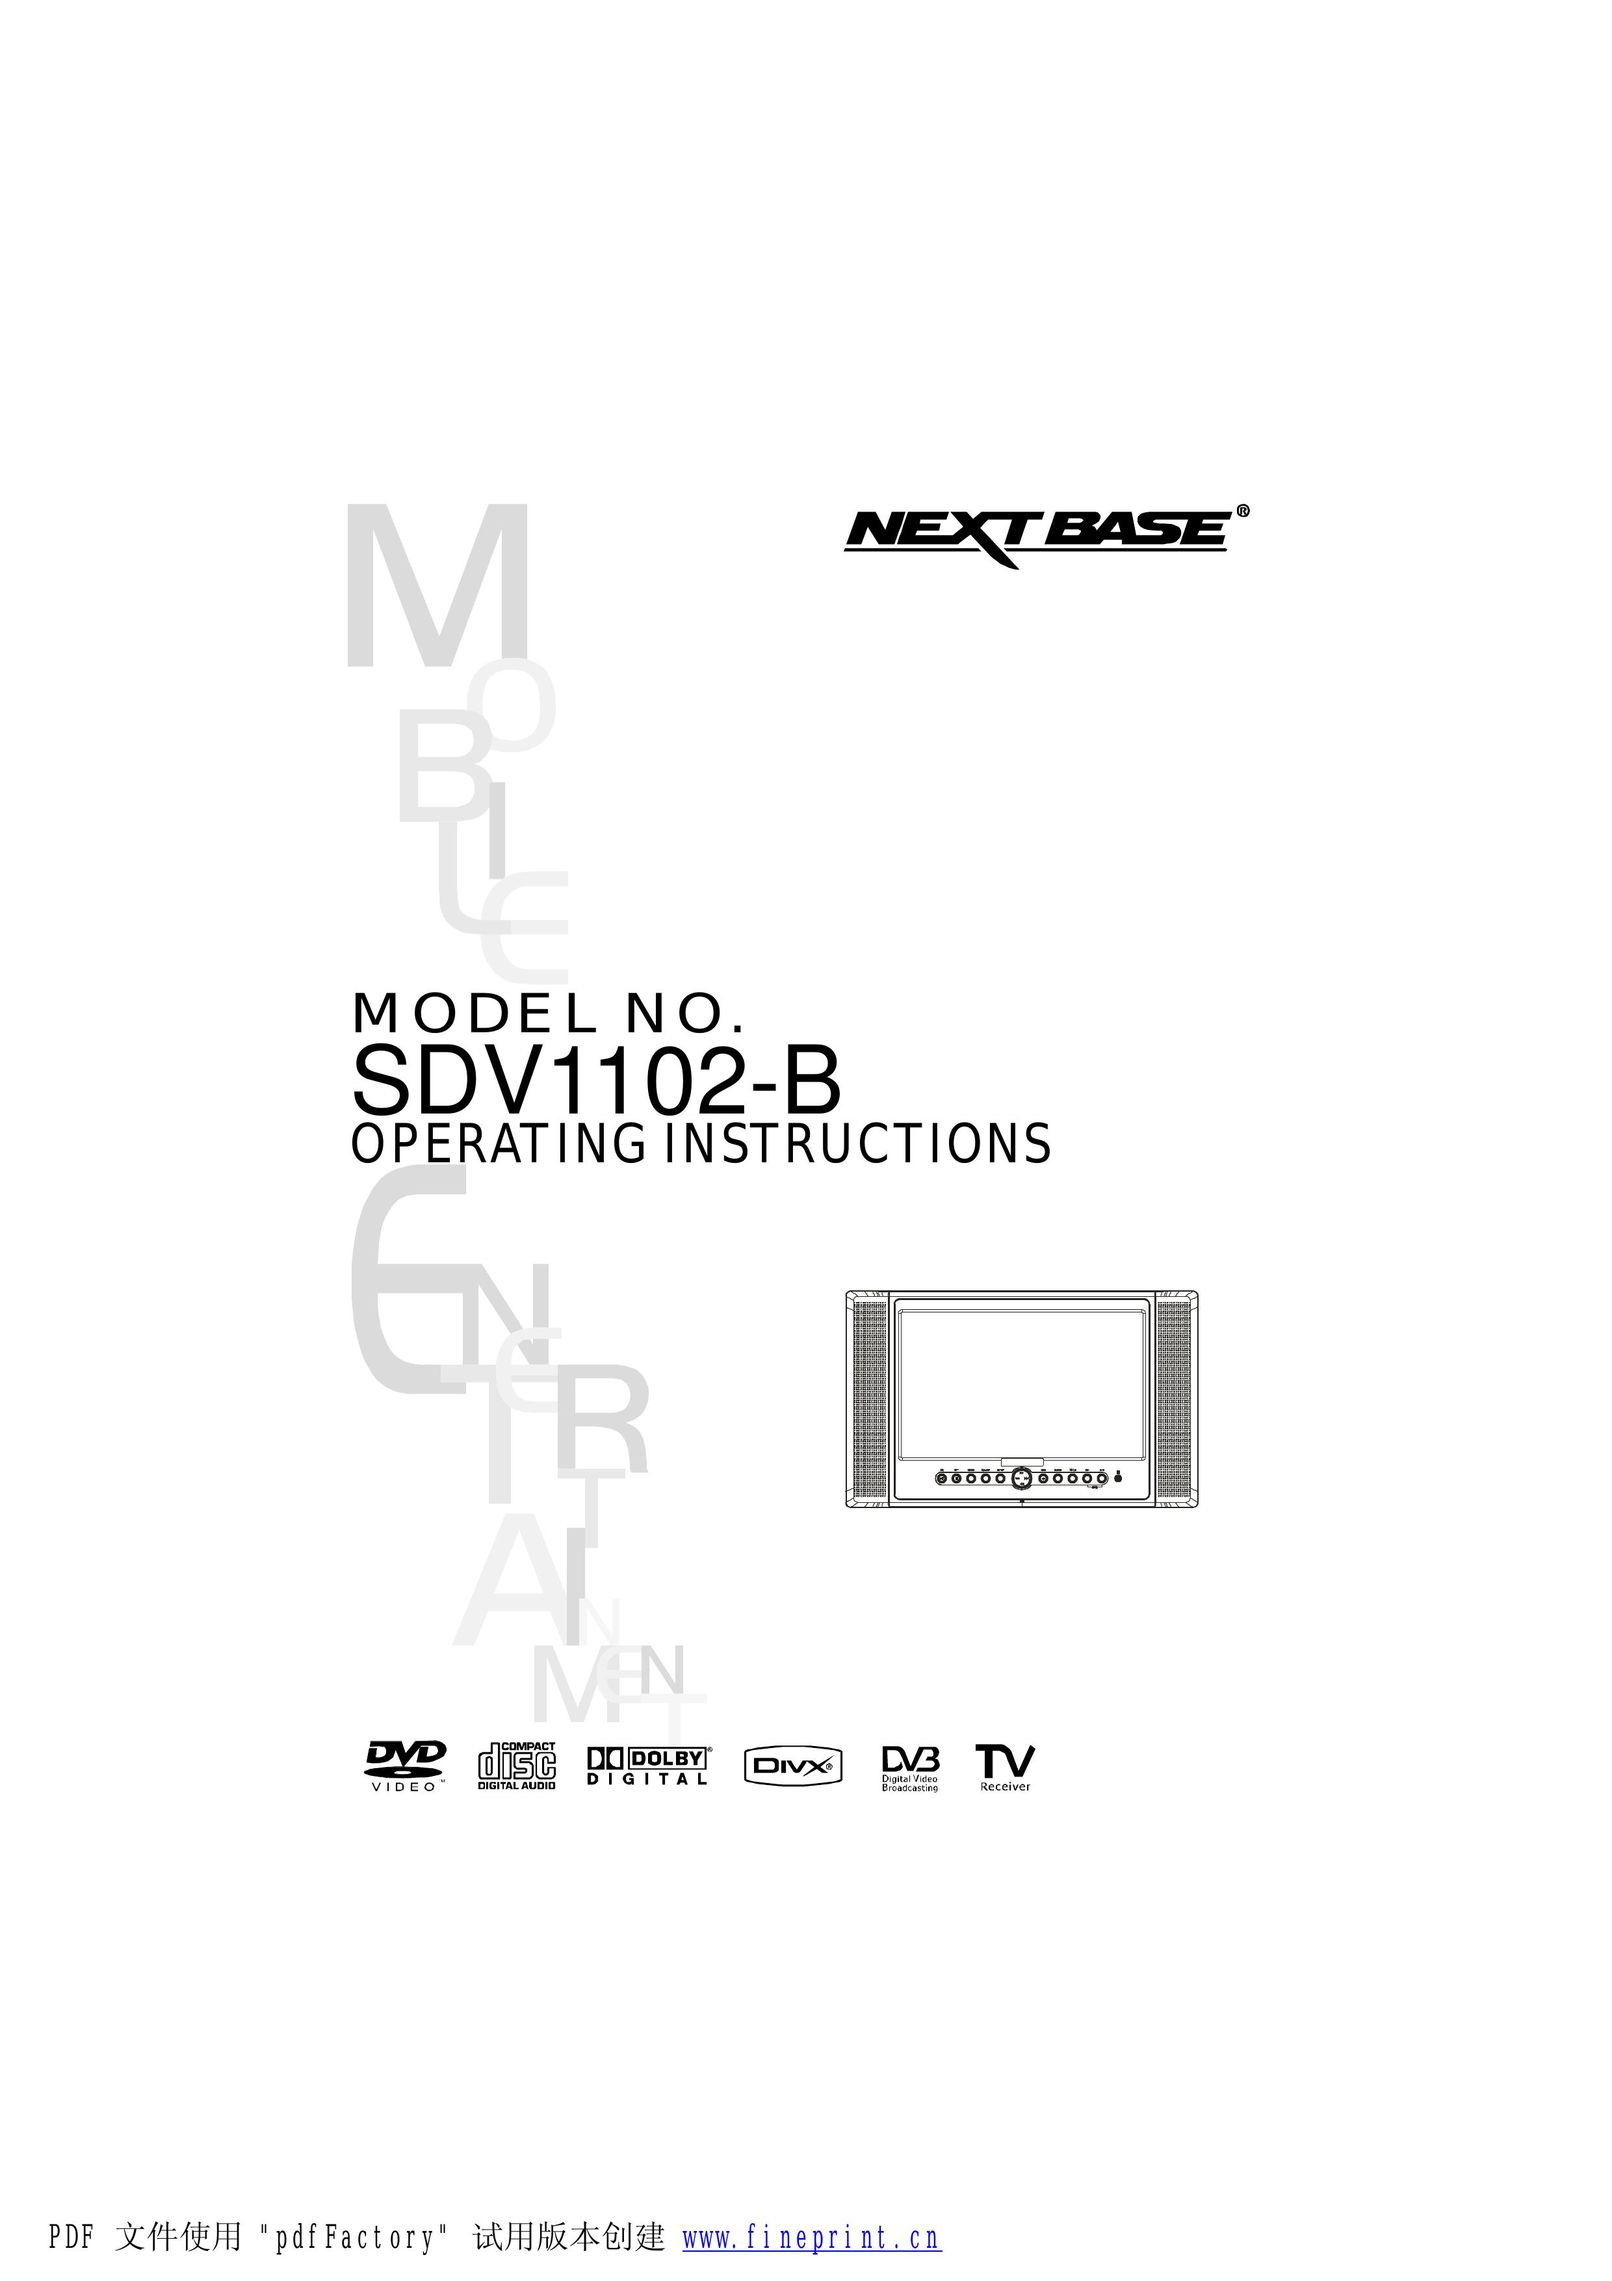 NextBase SDV1102-B Portable DVD Player User Manual